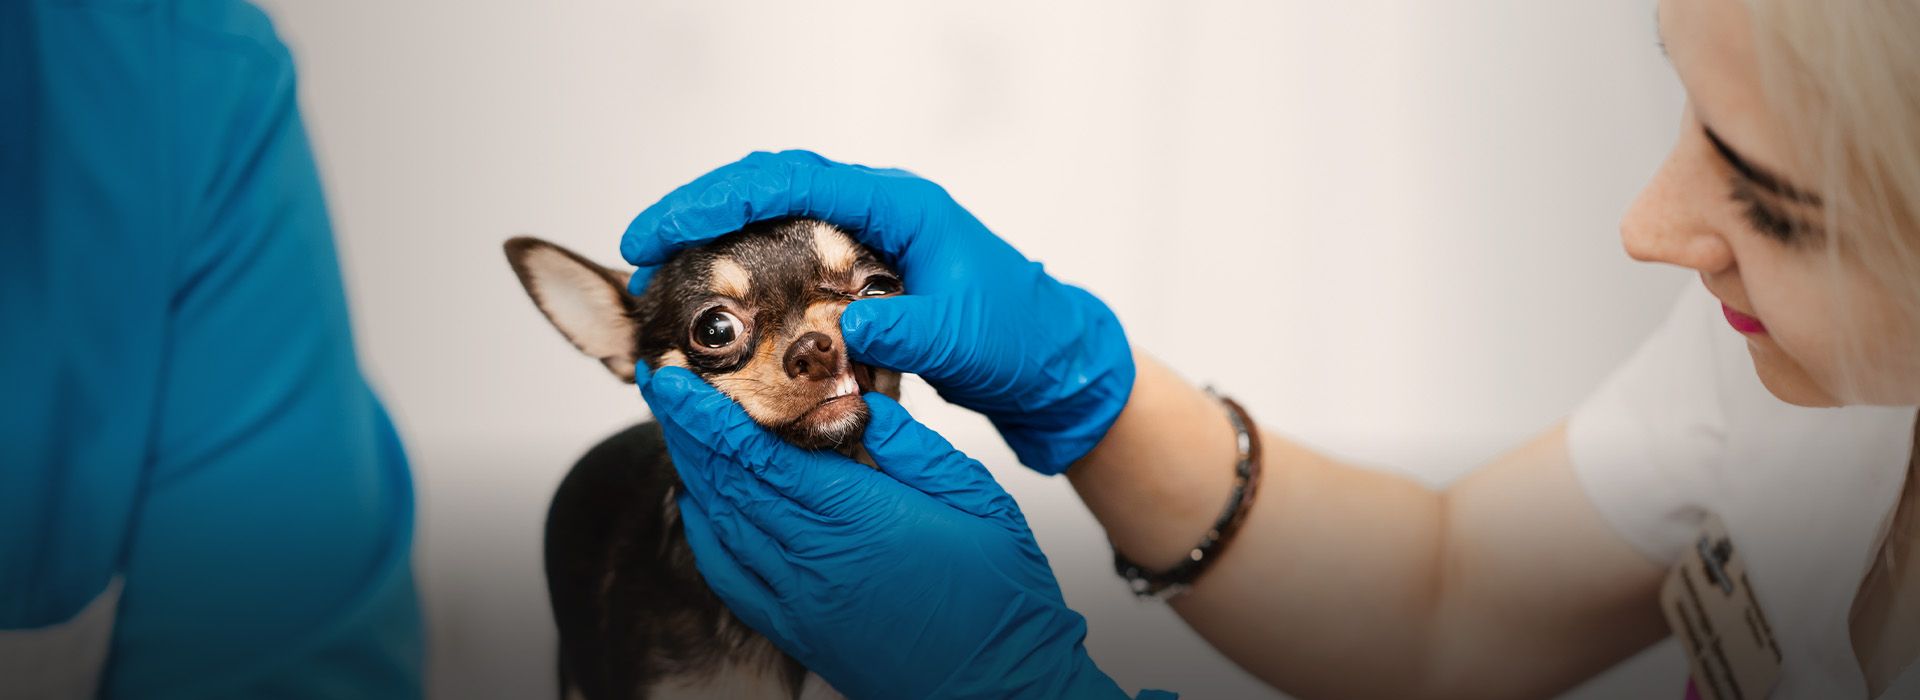 Professional veterinary examination of dogs teeth